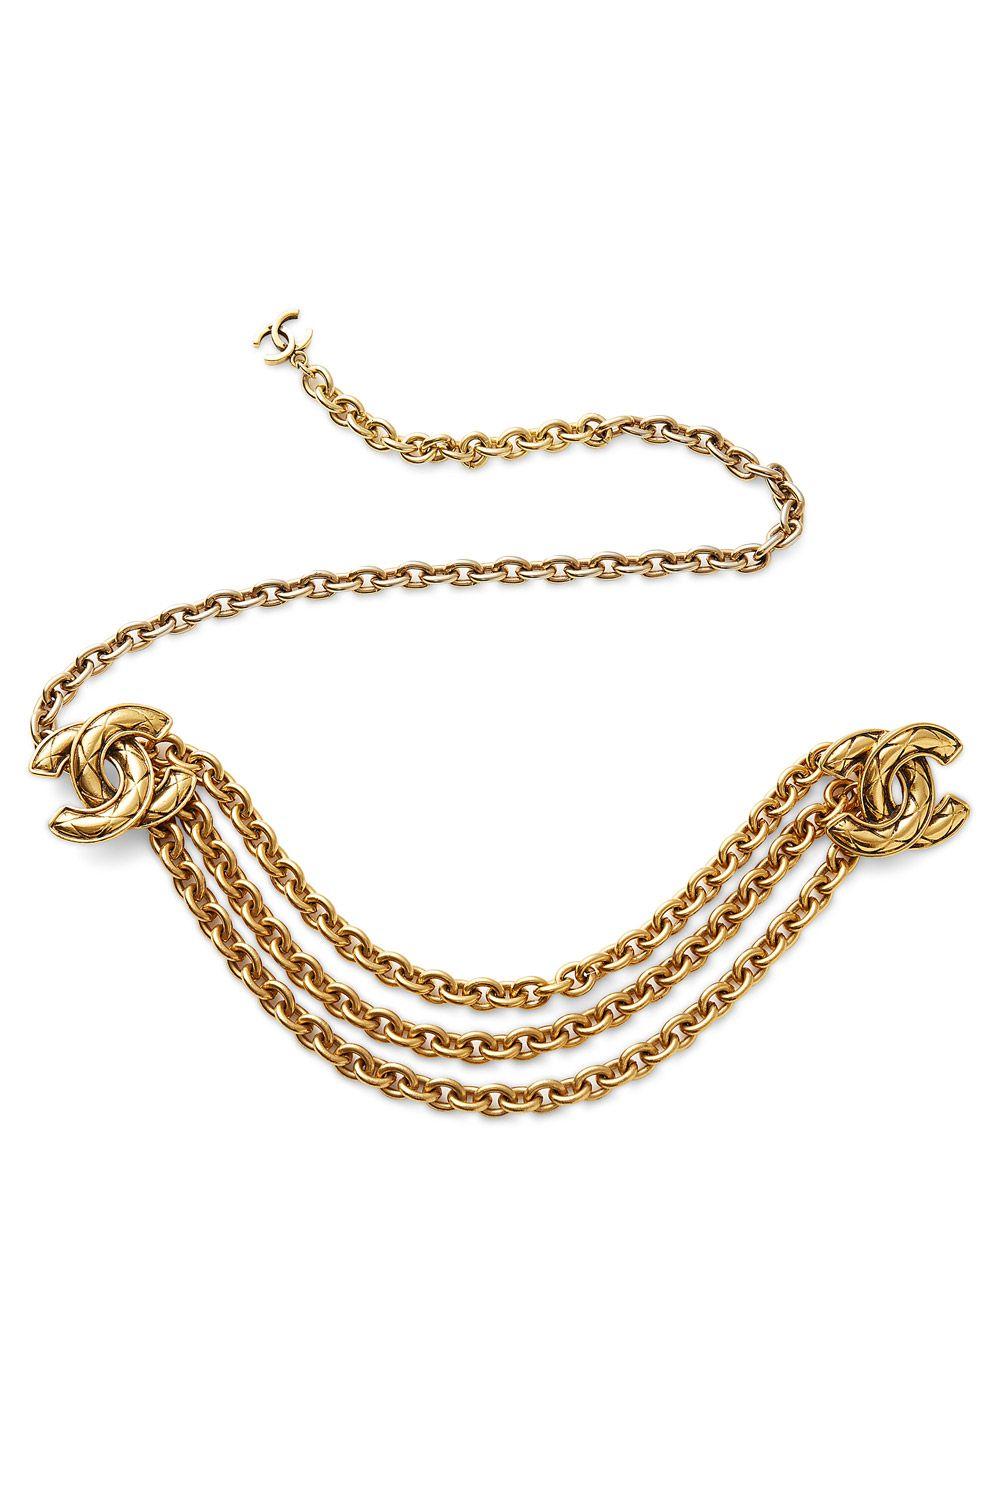 Two C Logo - Couture double C logo chain belt/necklace | Cara Mia Vintage